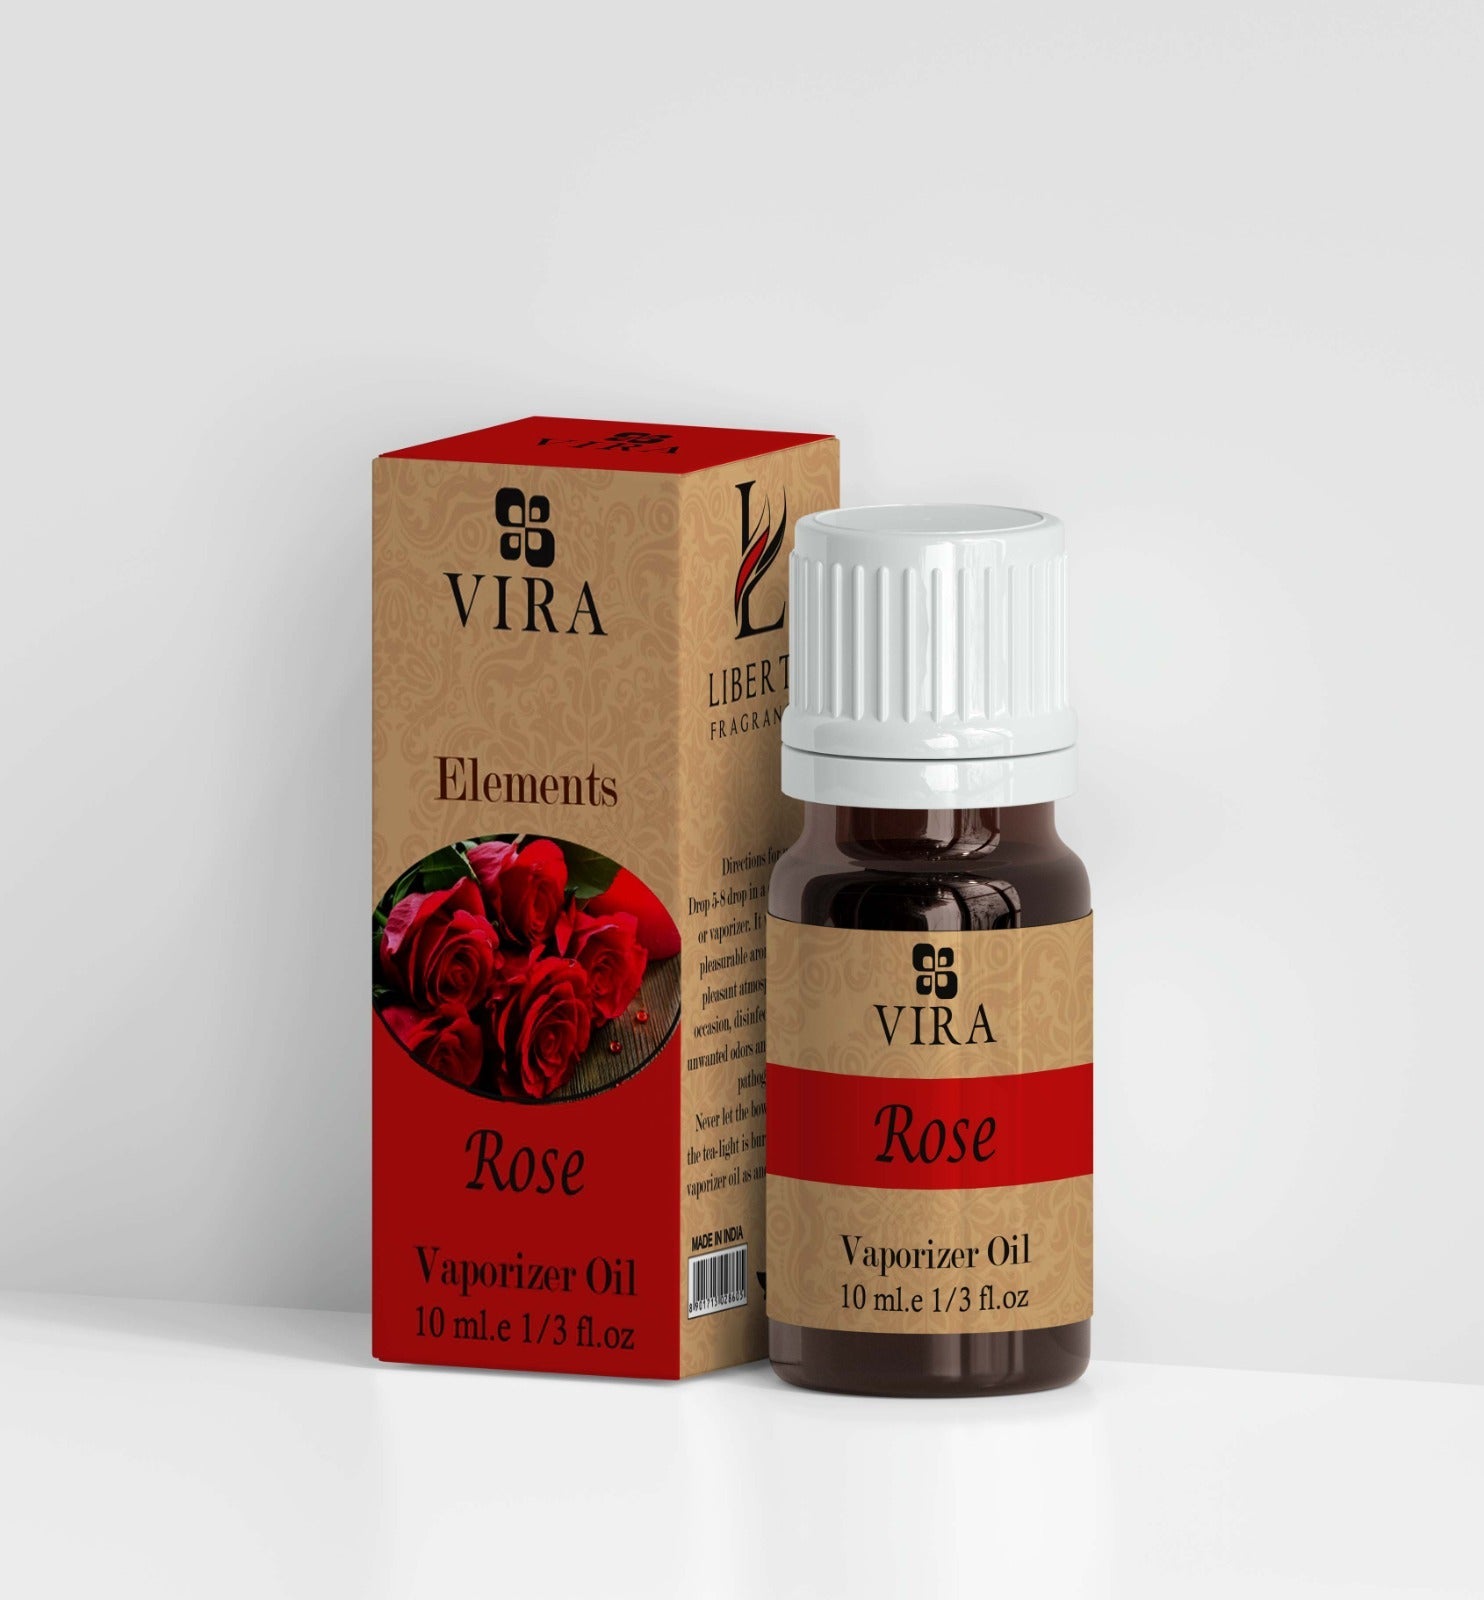 Rose - Elements collection vaporizer oil by Vira - scentingsecrets